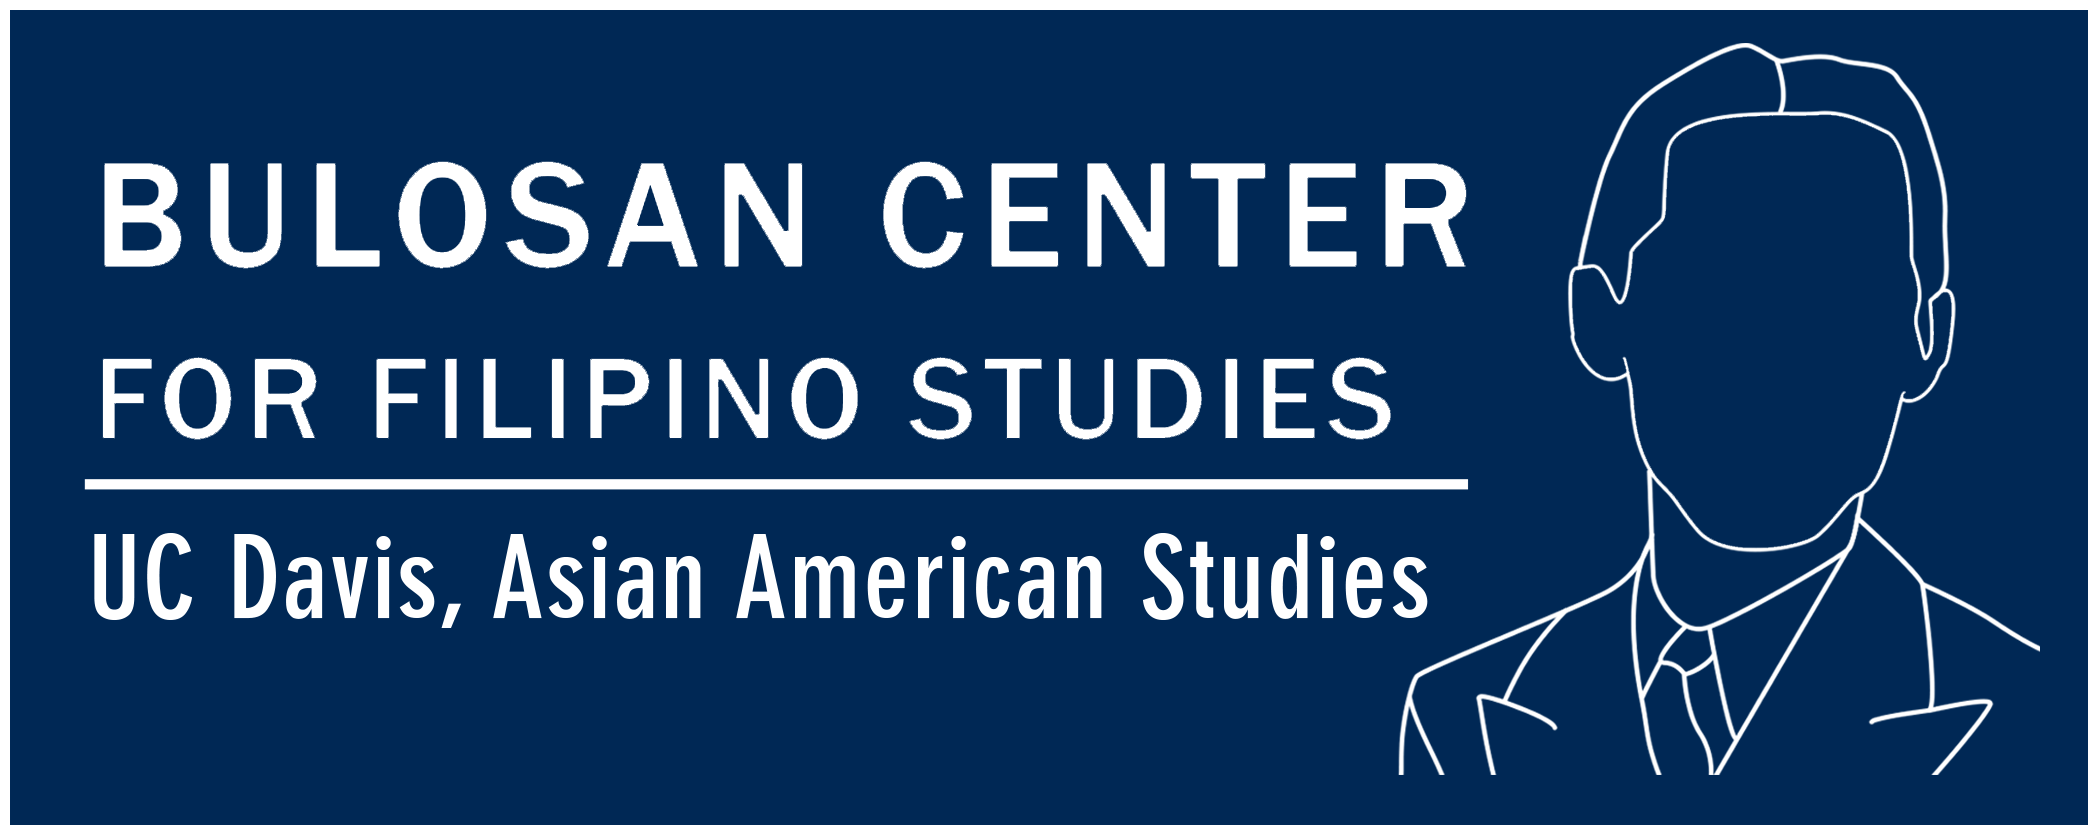 Bulosan Center for Filipino Studies